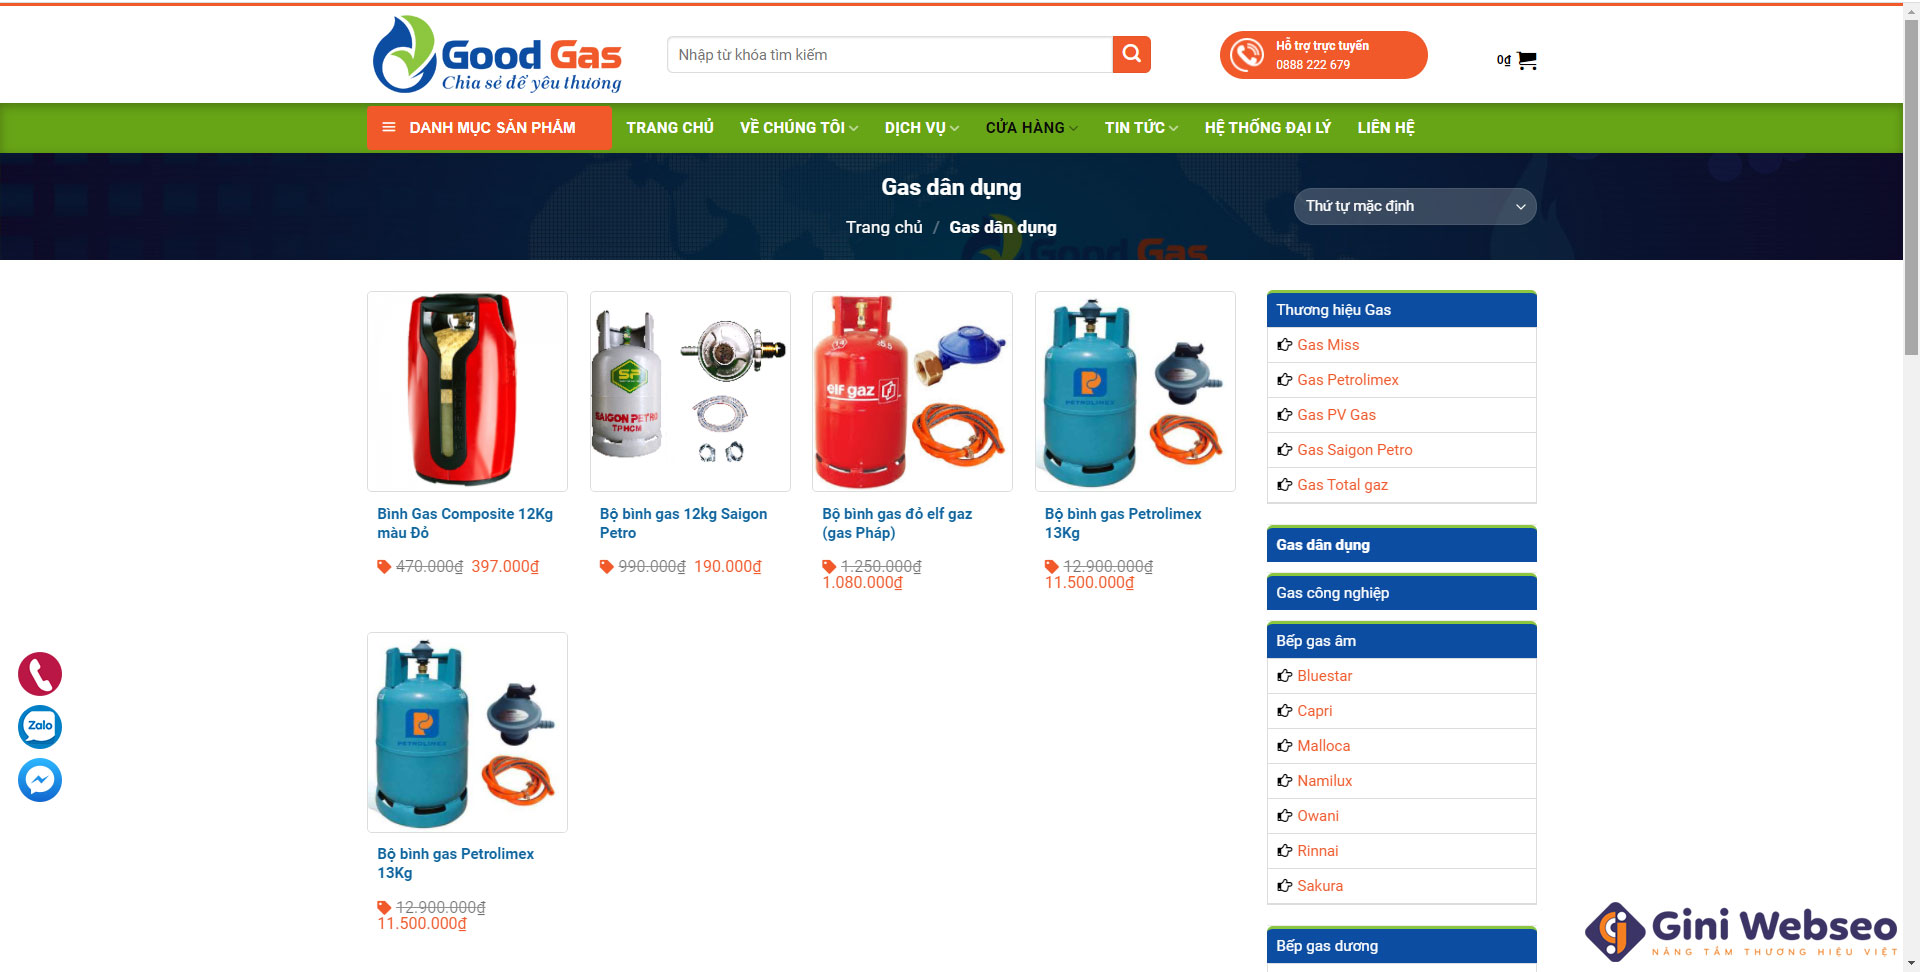 Thiết kế website bán gas Good Gas